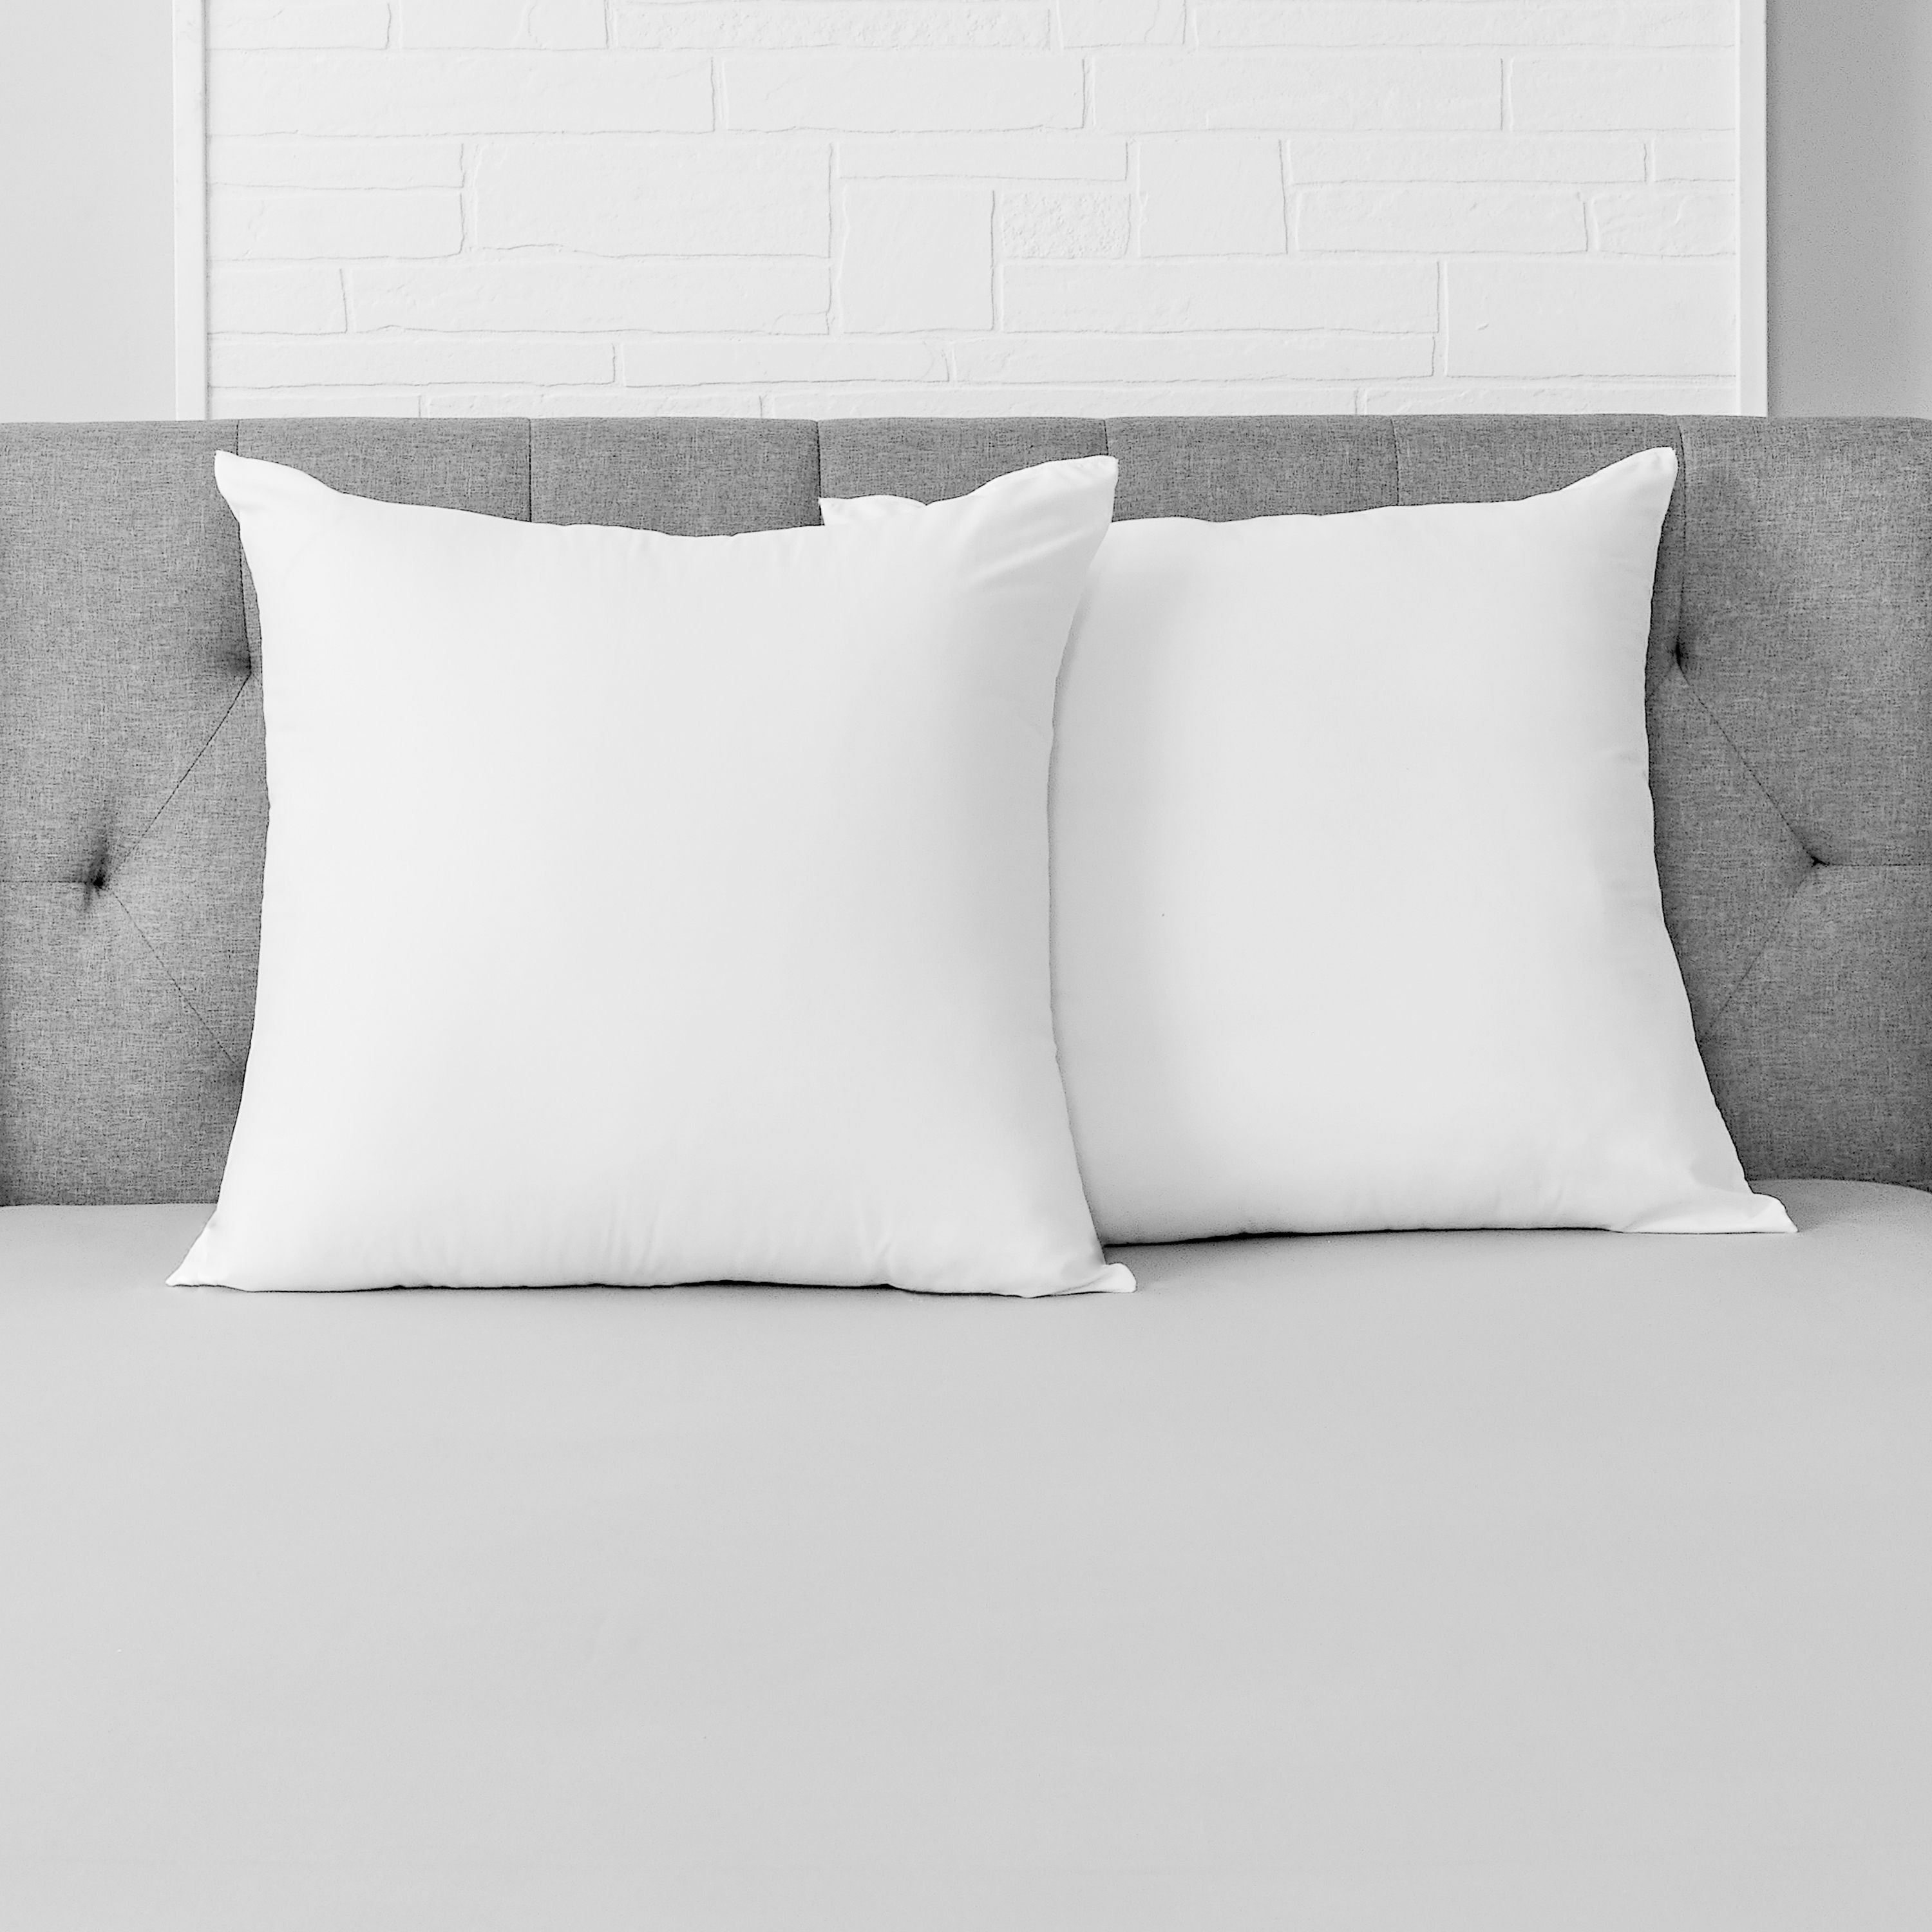 NA Pillow Protectors - Bed Bath & Beyond